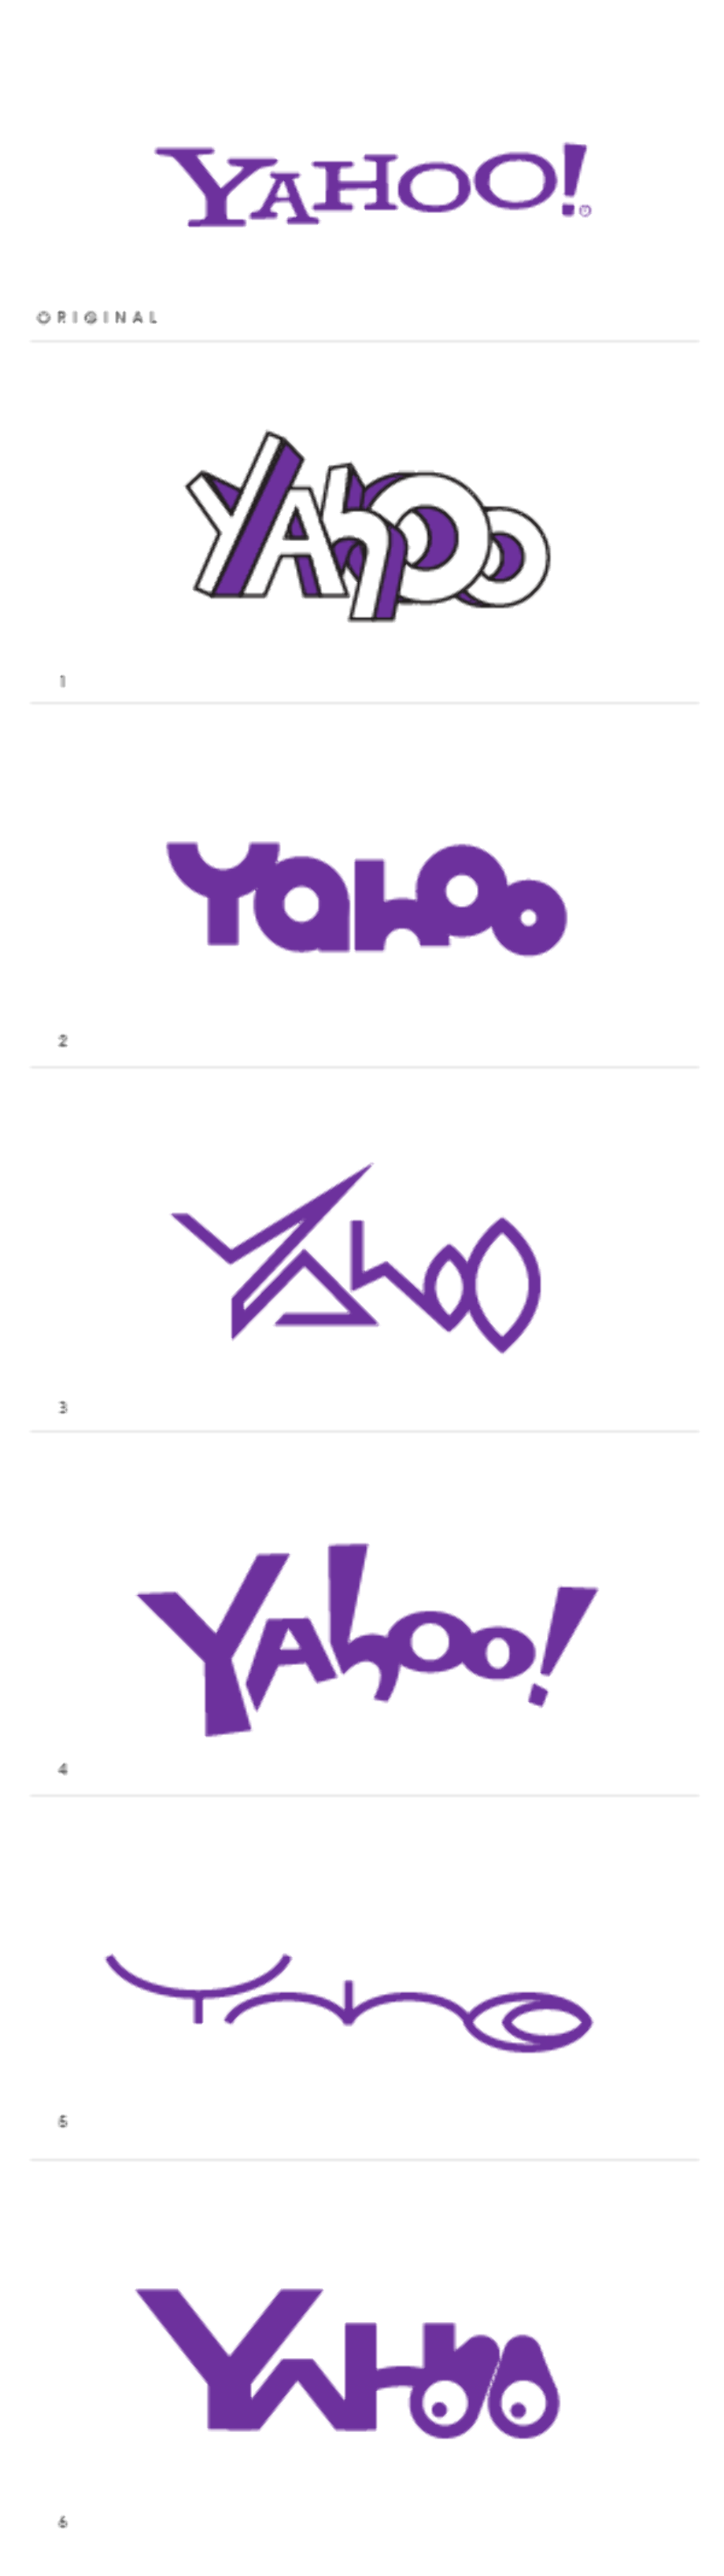 yahoo logo original